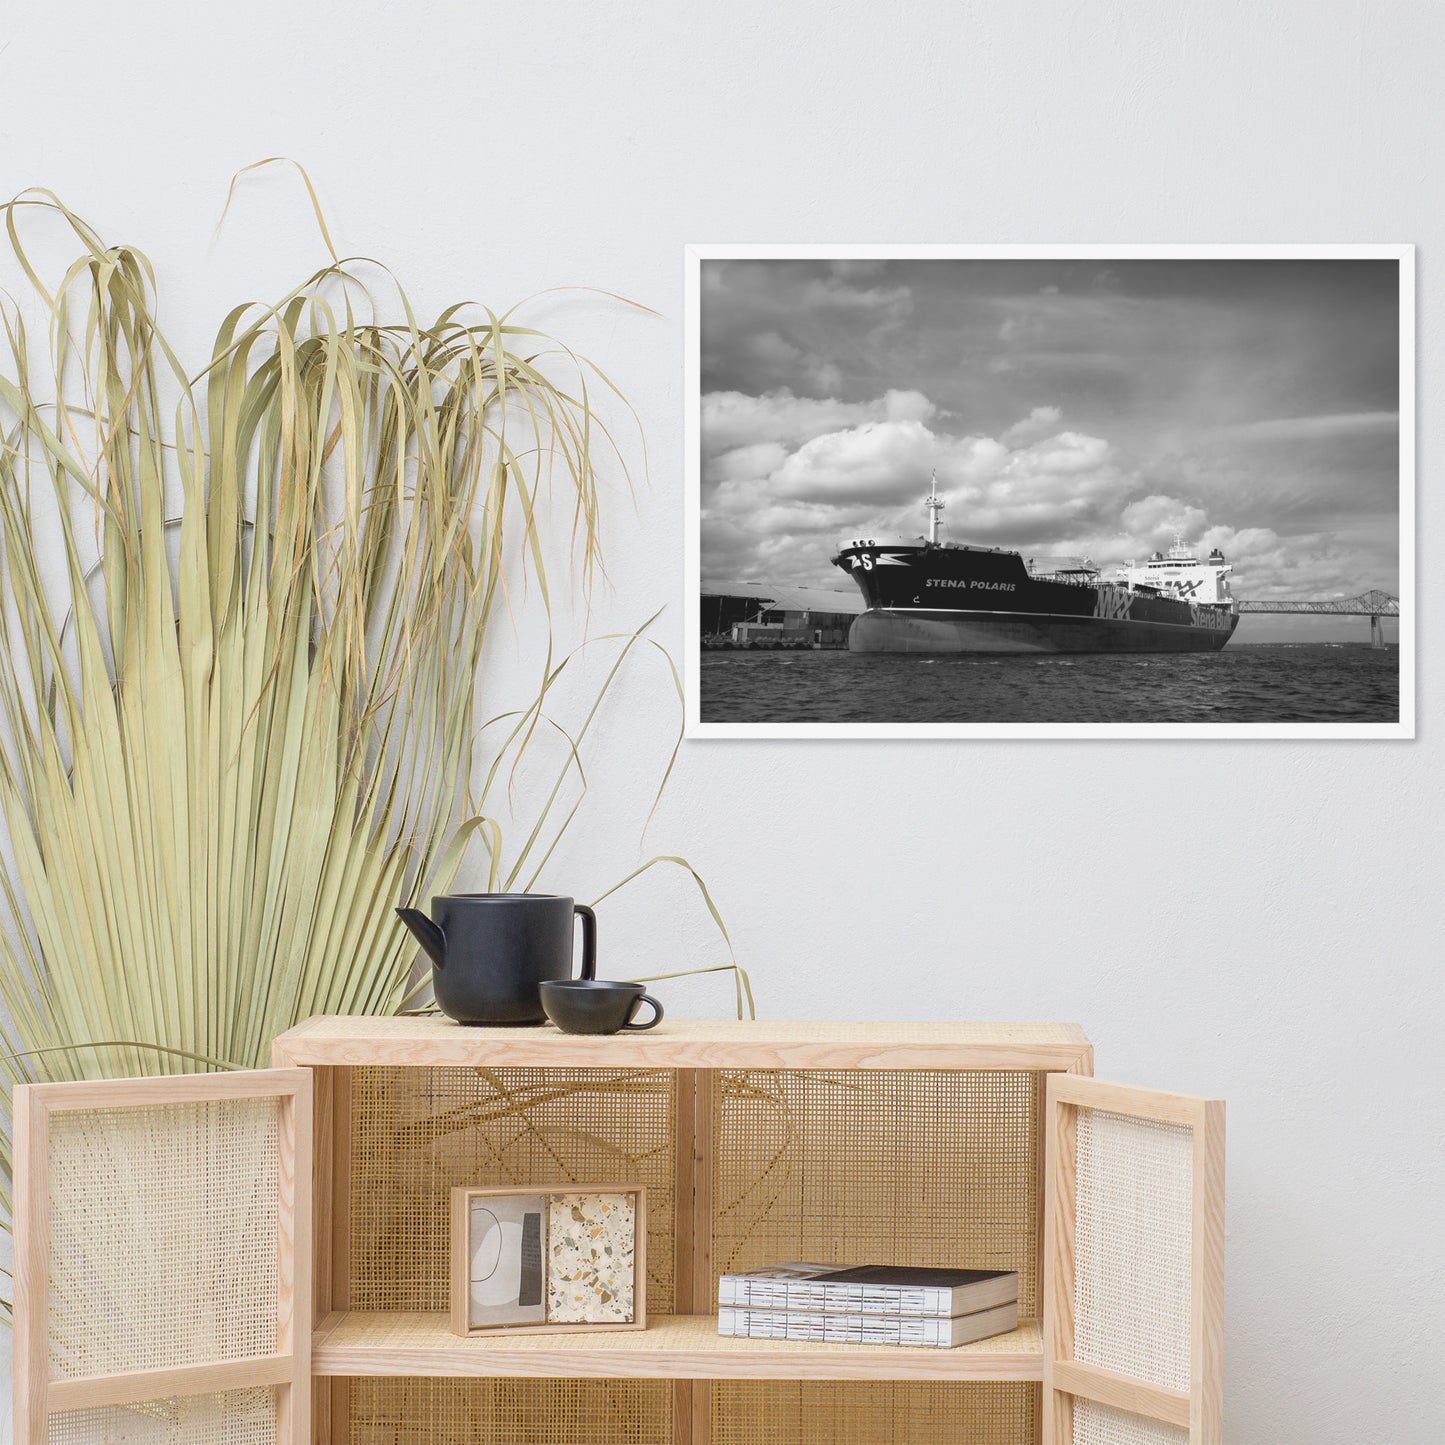 Ship on The St. Johns River Coastal Photo Framed Wall Art Print